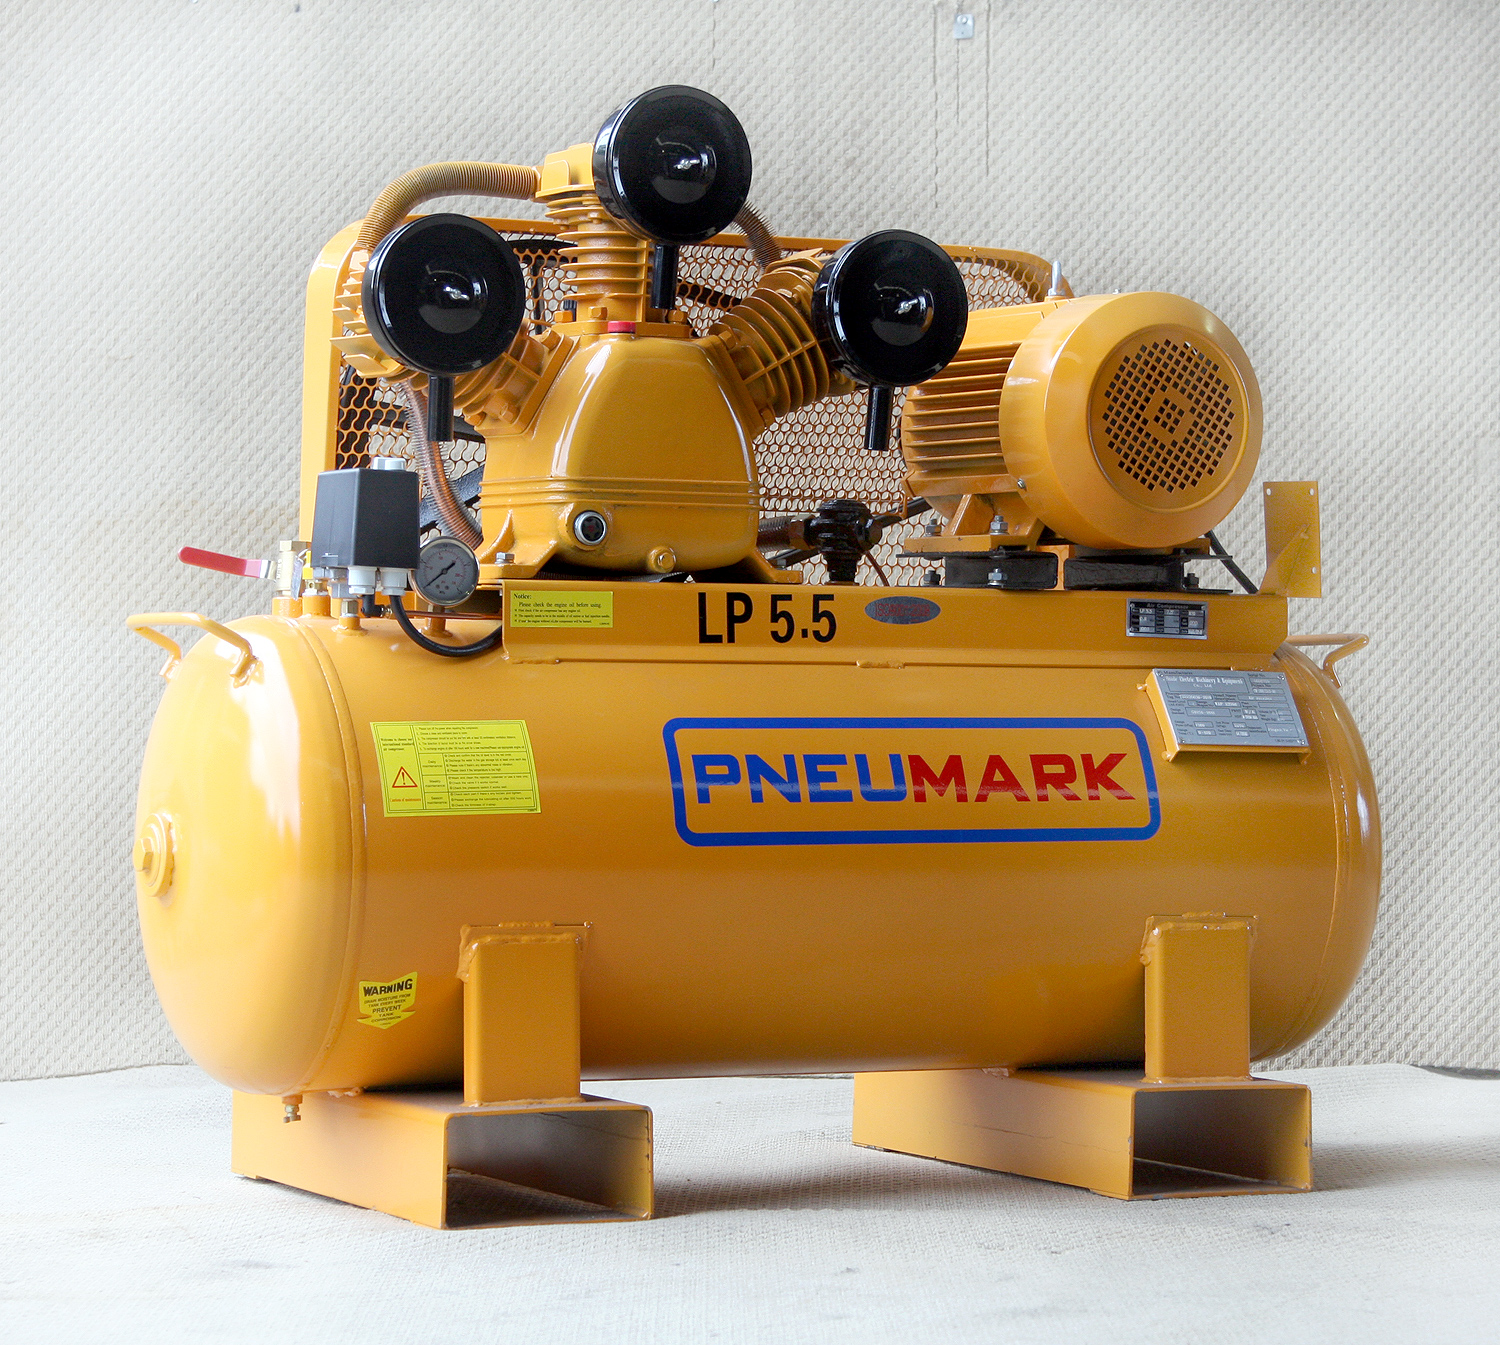 Pneumark 3 Phase Piston Compressor